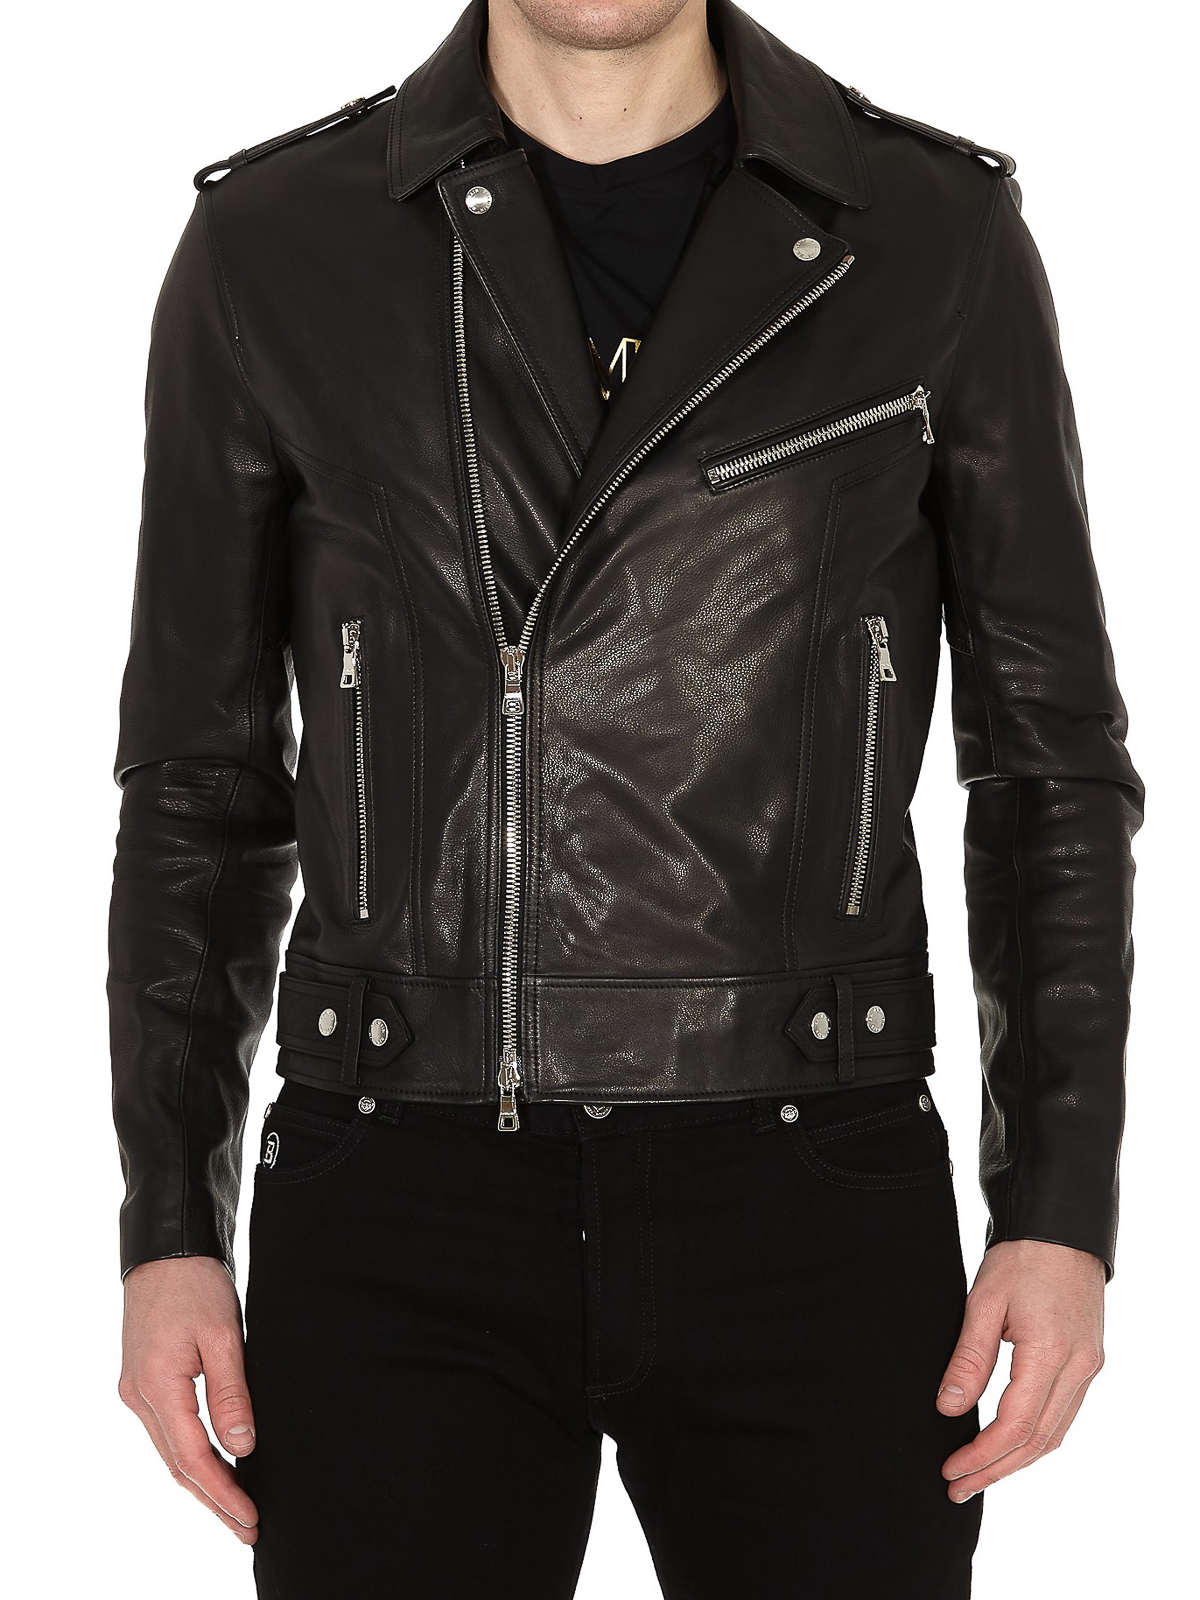 Leather jacket Balmain - Balmain Paris print leather jacket ...